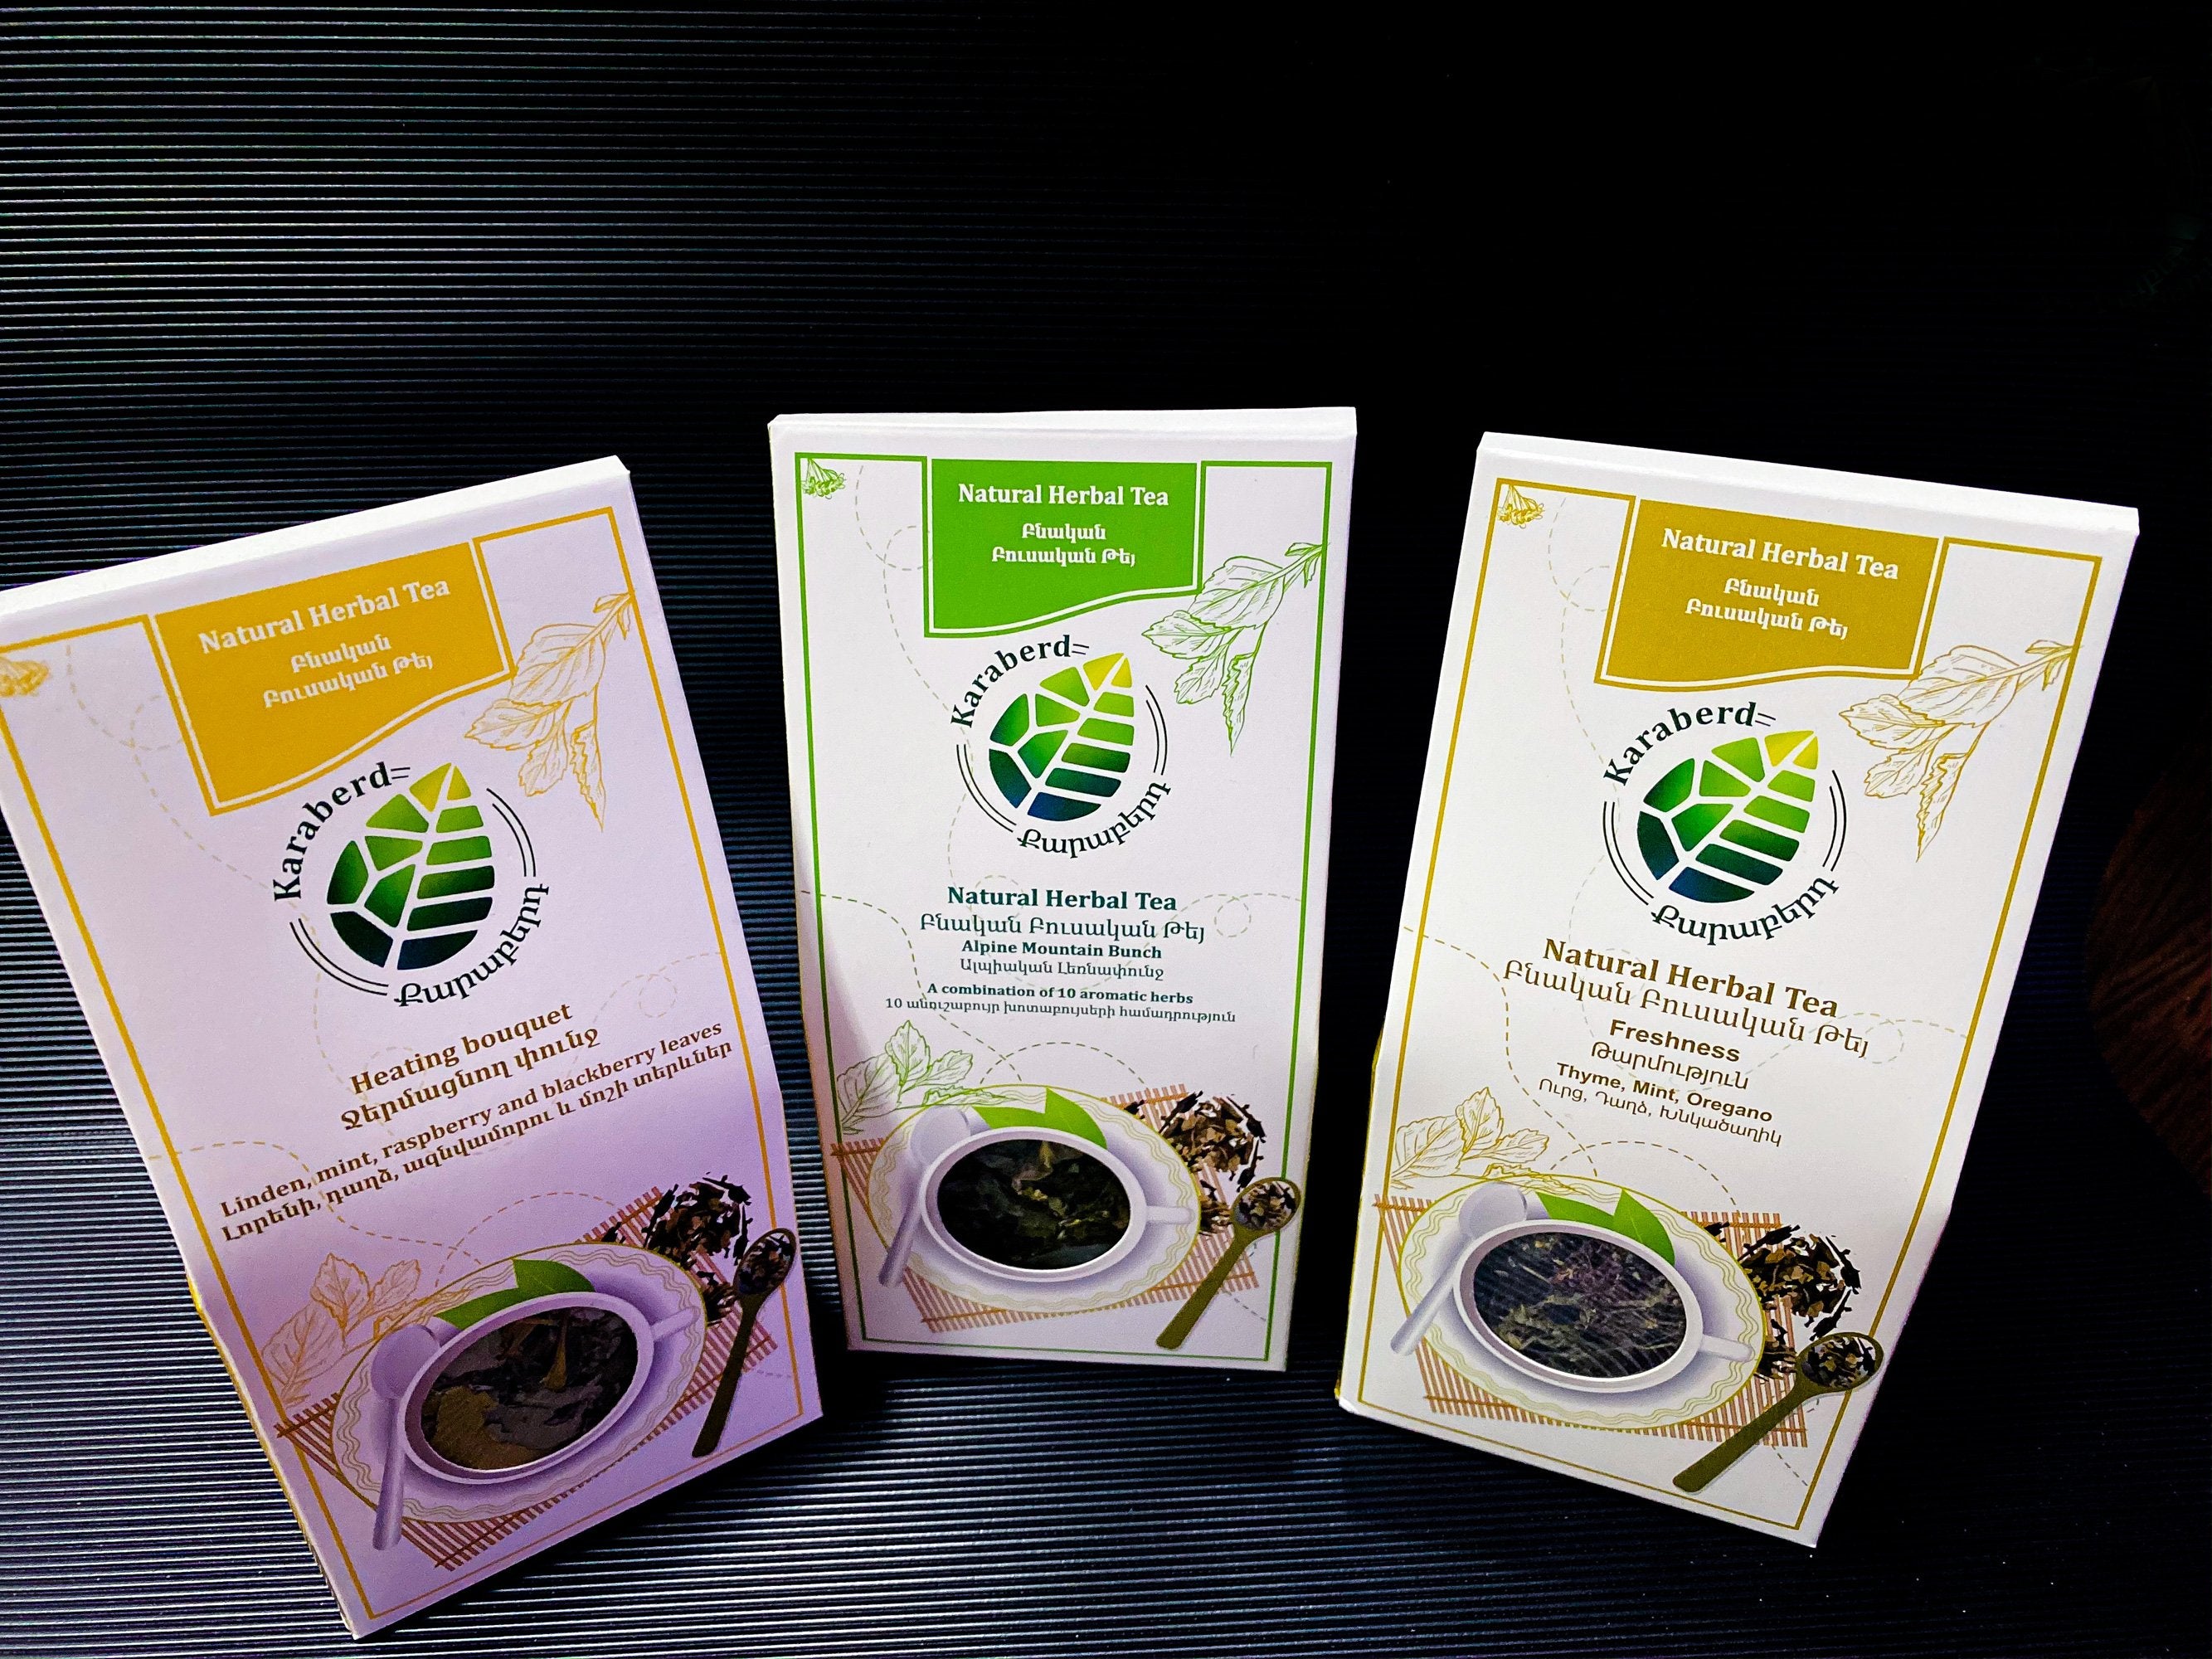 Karaberd Herbal Tea 3 Pack Collection